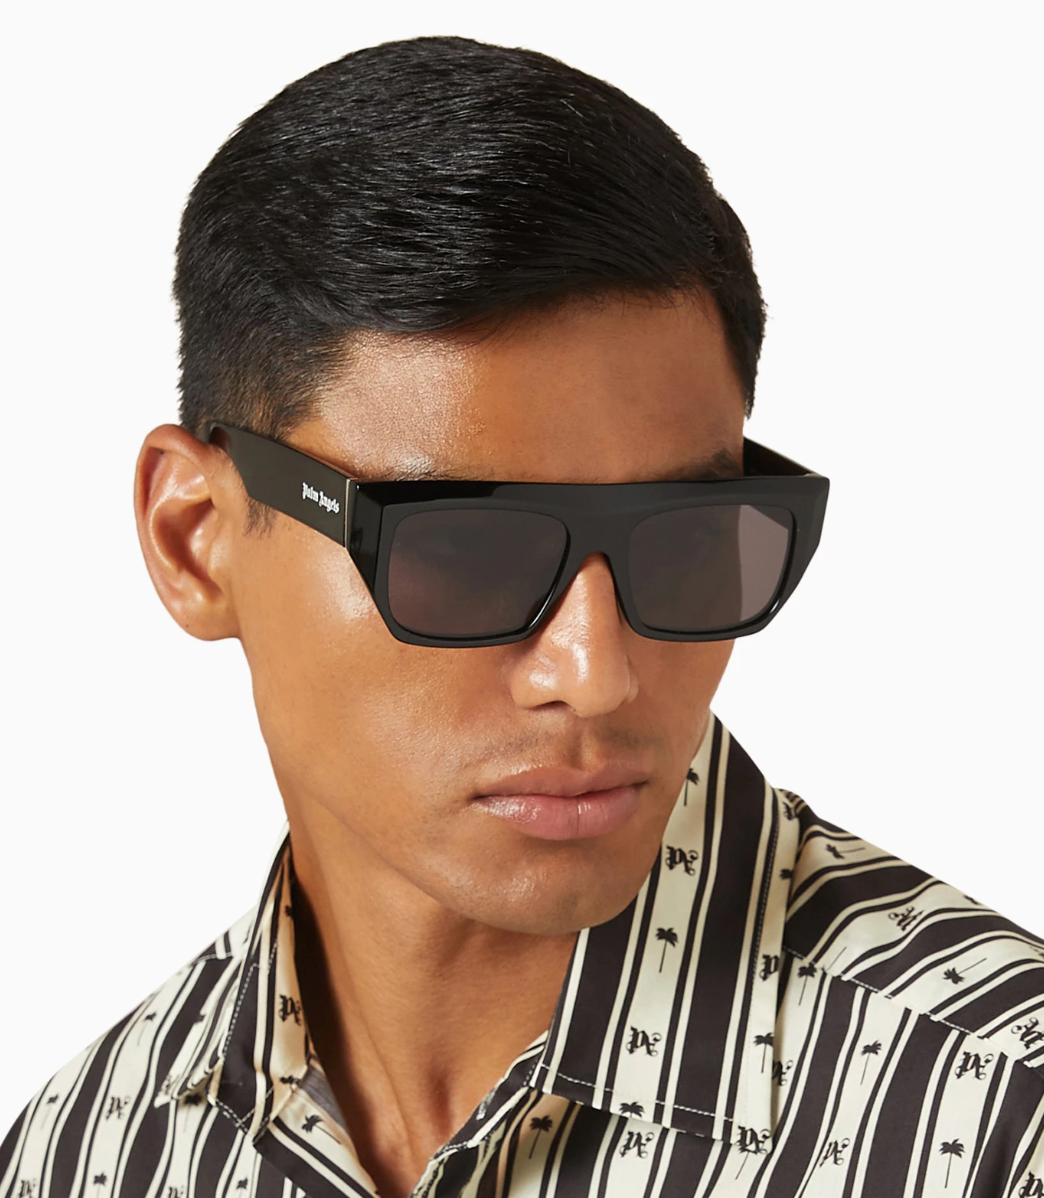 Palm Angels PERI052S24PLA0011007 54mm New Sunglasses